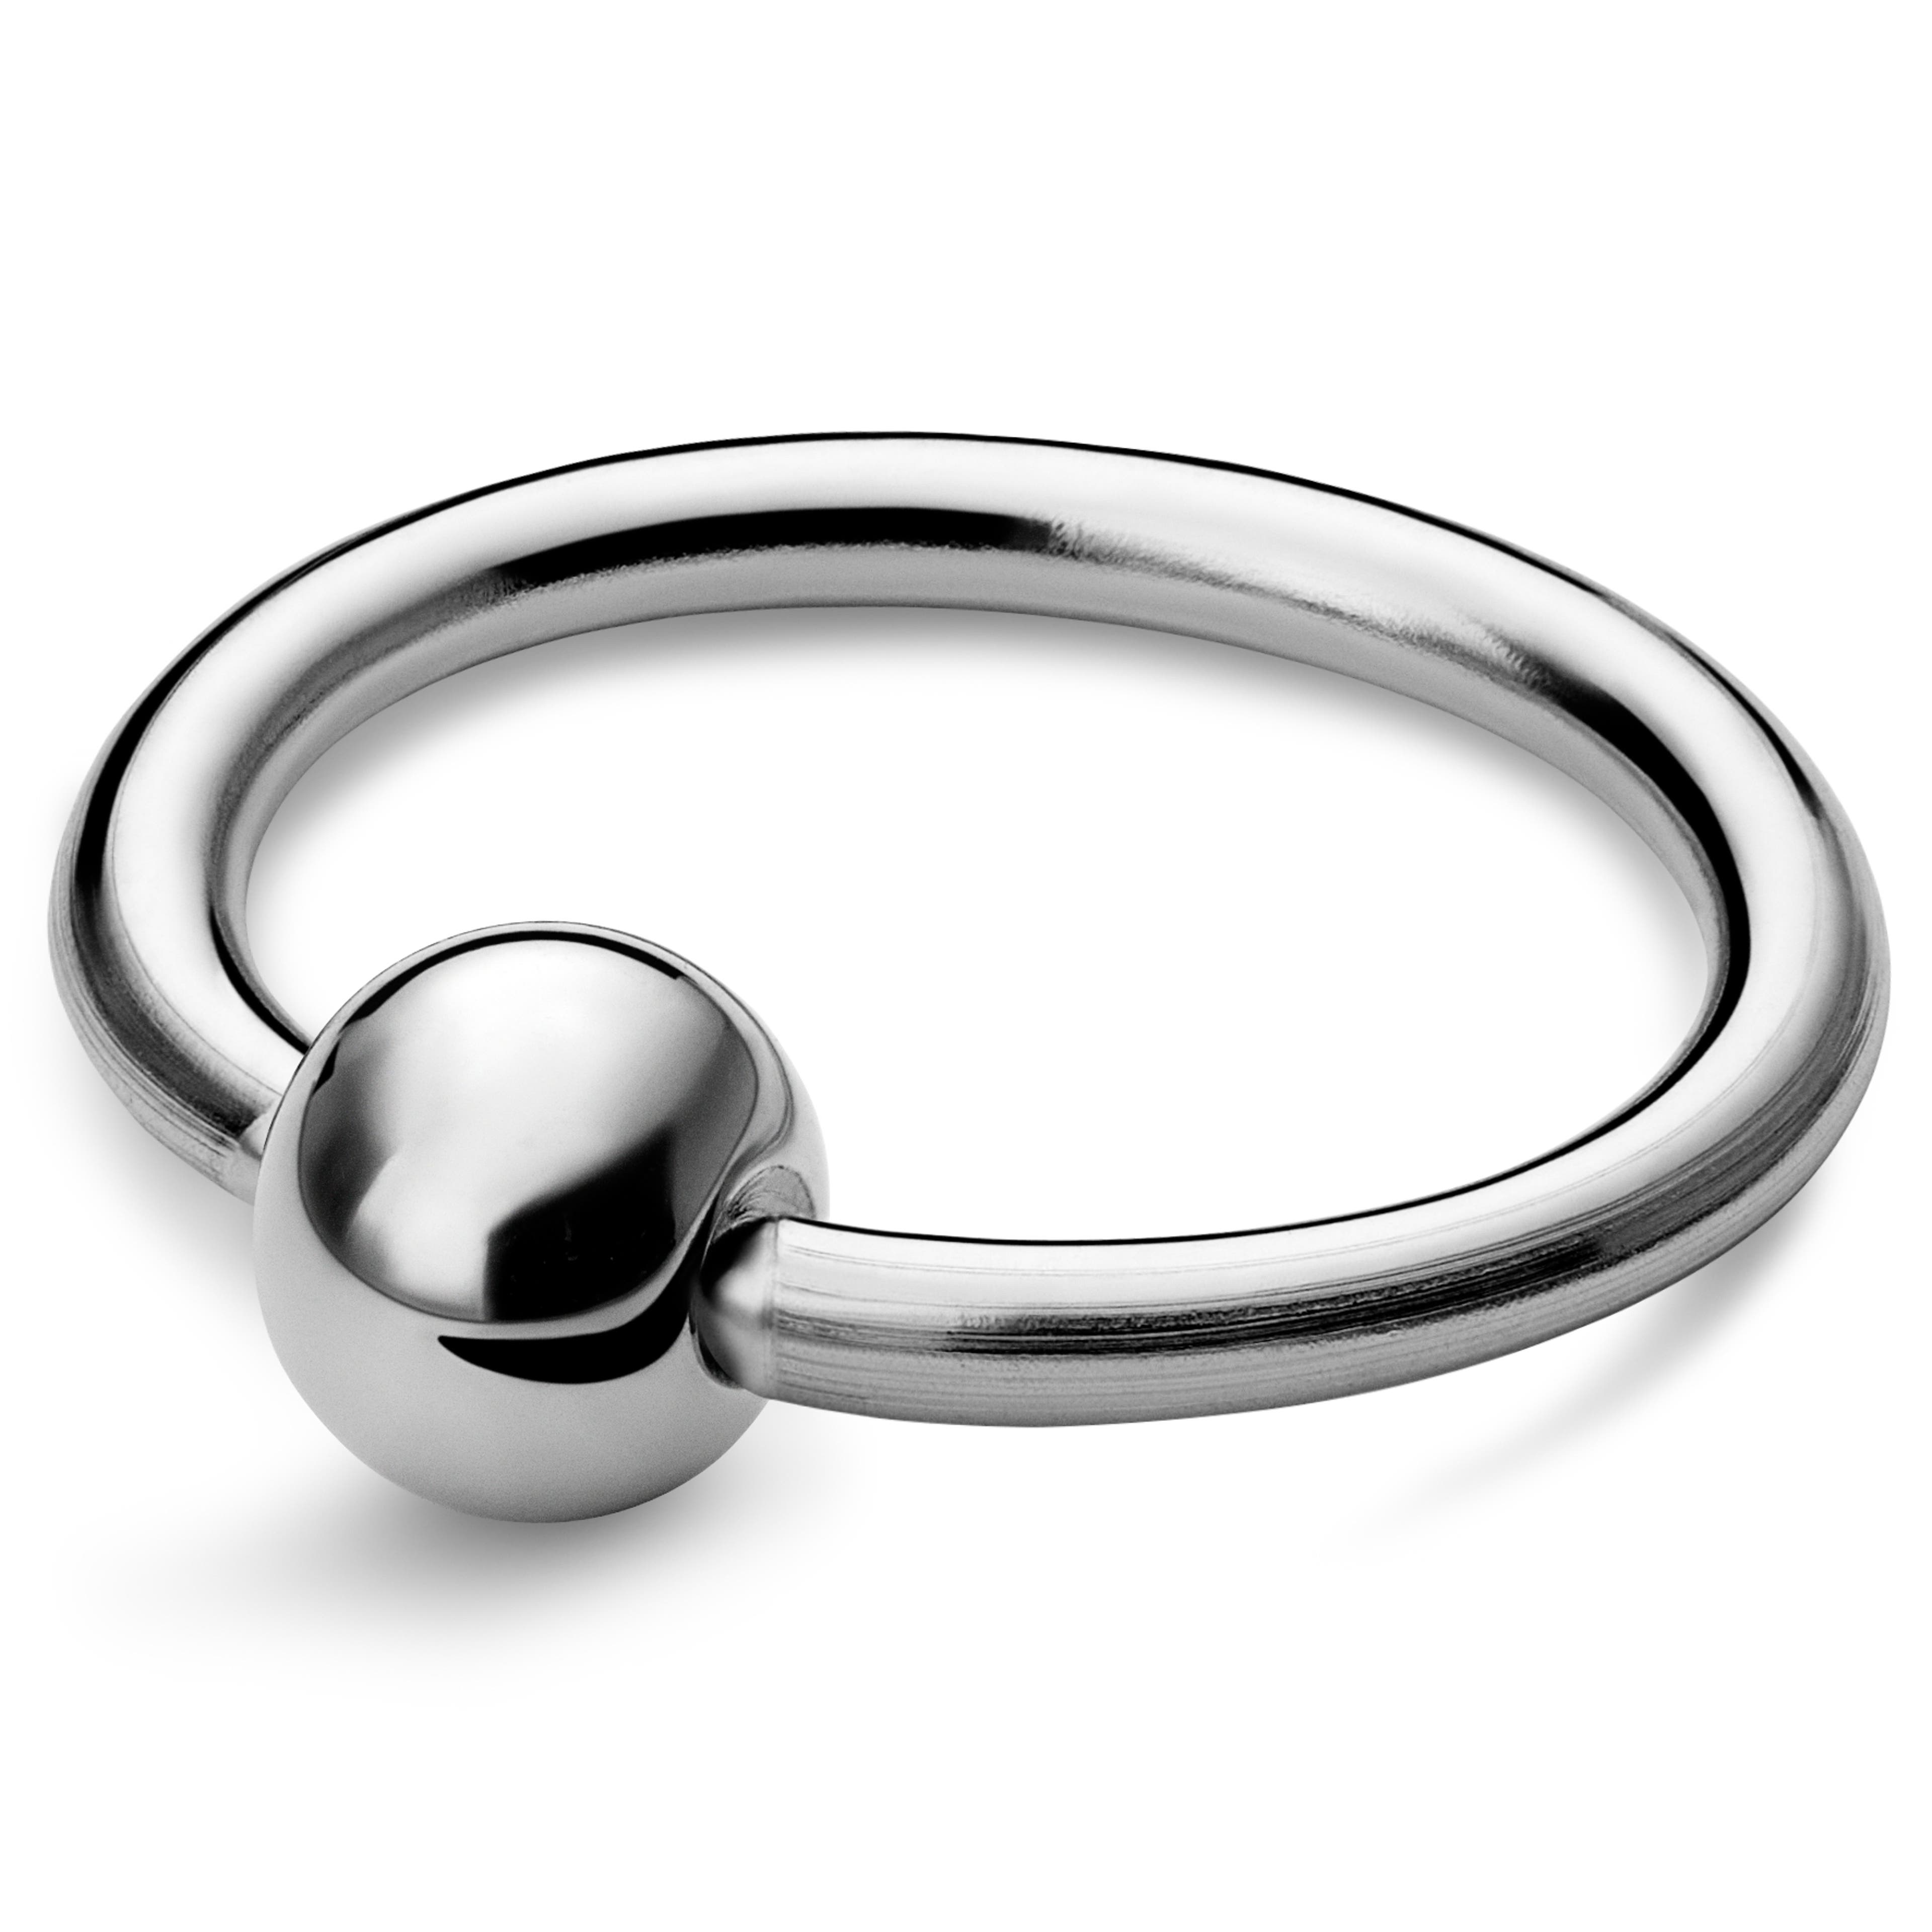 Captive bead ring da 10 mm in titanio color argento